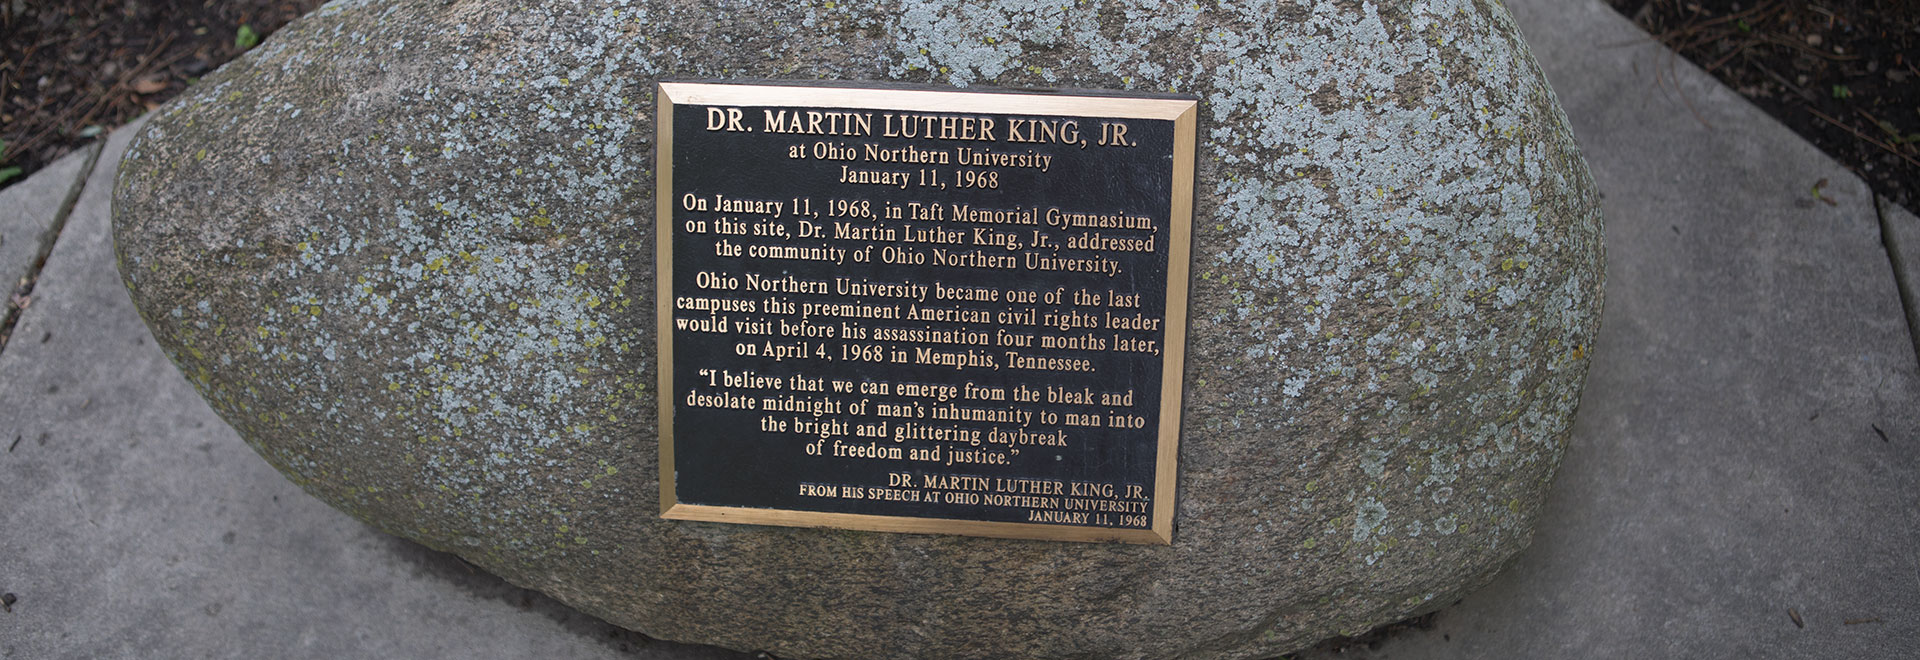 The plaque at 91直播commemorating MLK's speech.